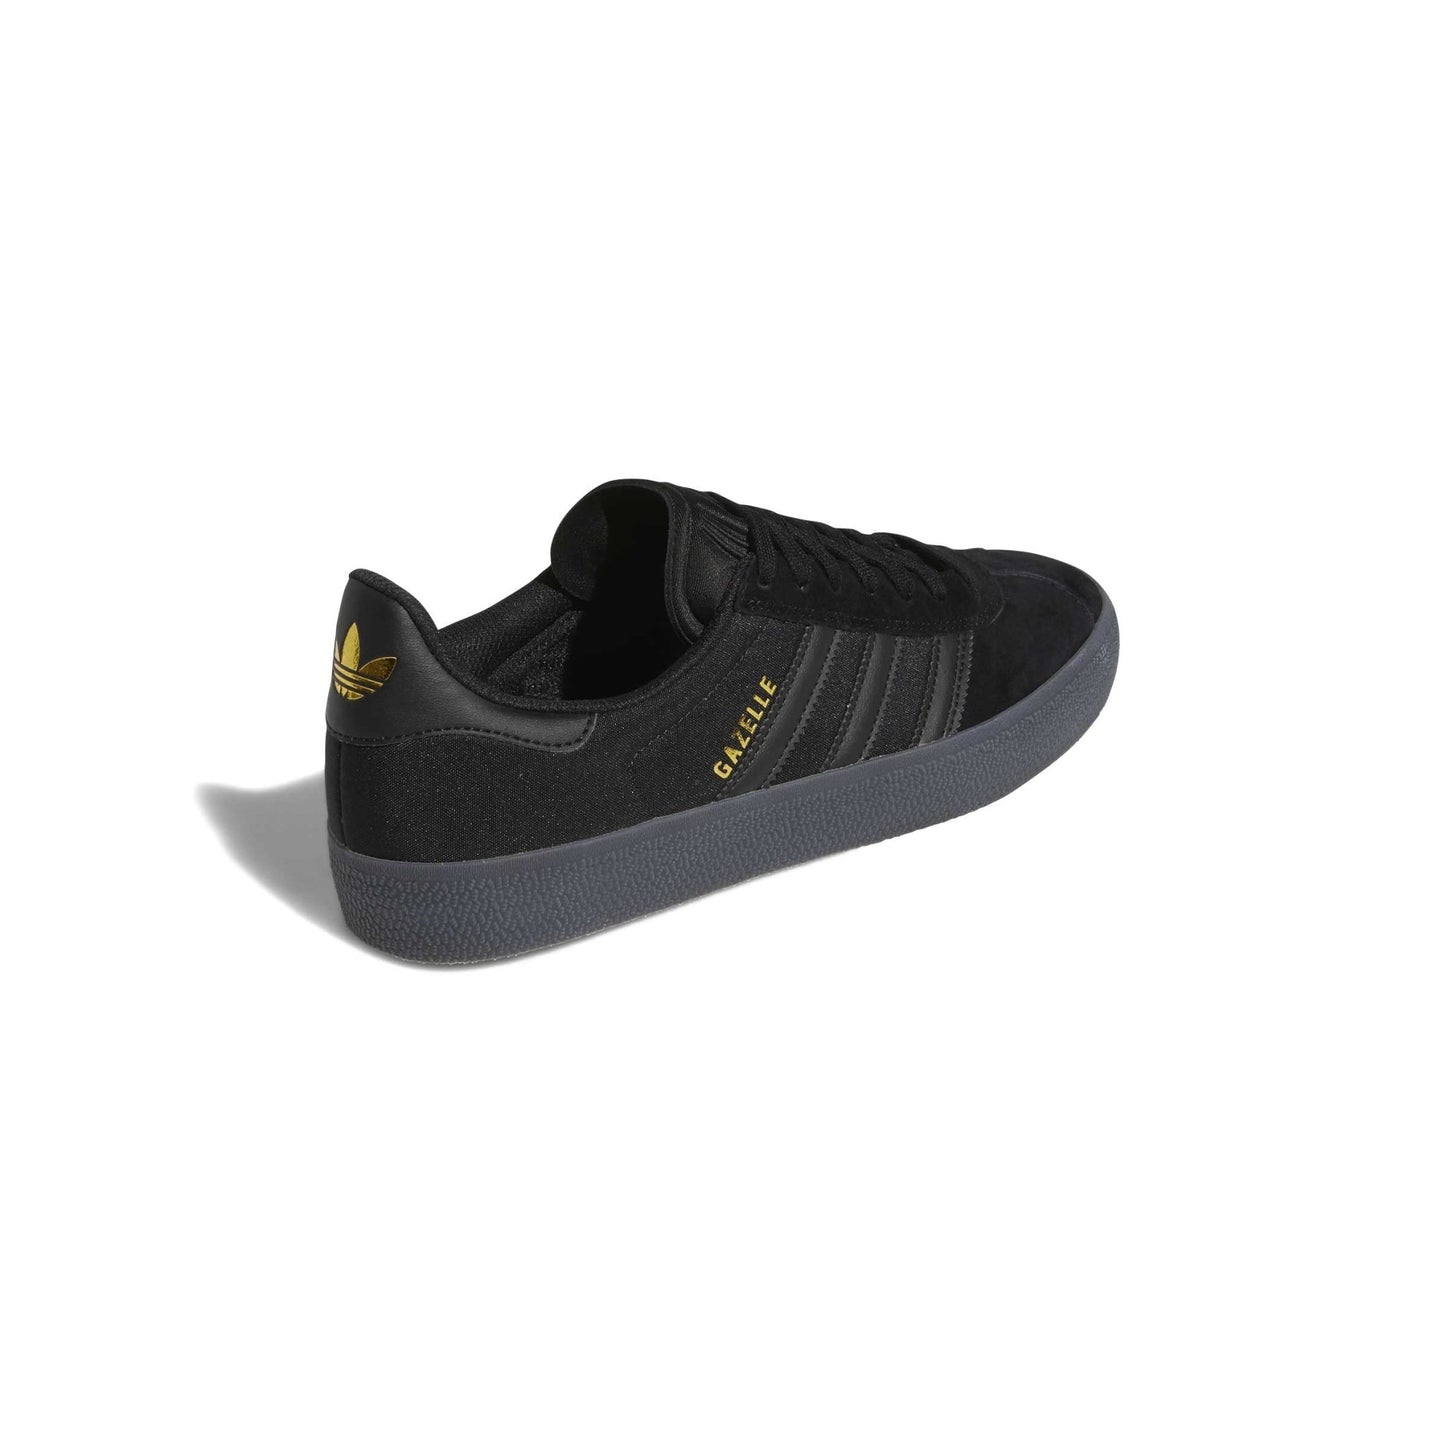 Adidas Gazelle ADV, core black / core black / gold metallic - Tiki Room Skateboards - 8